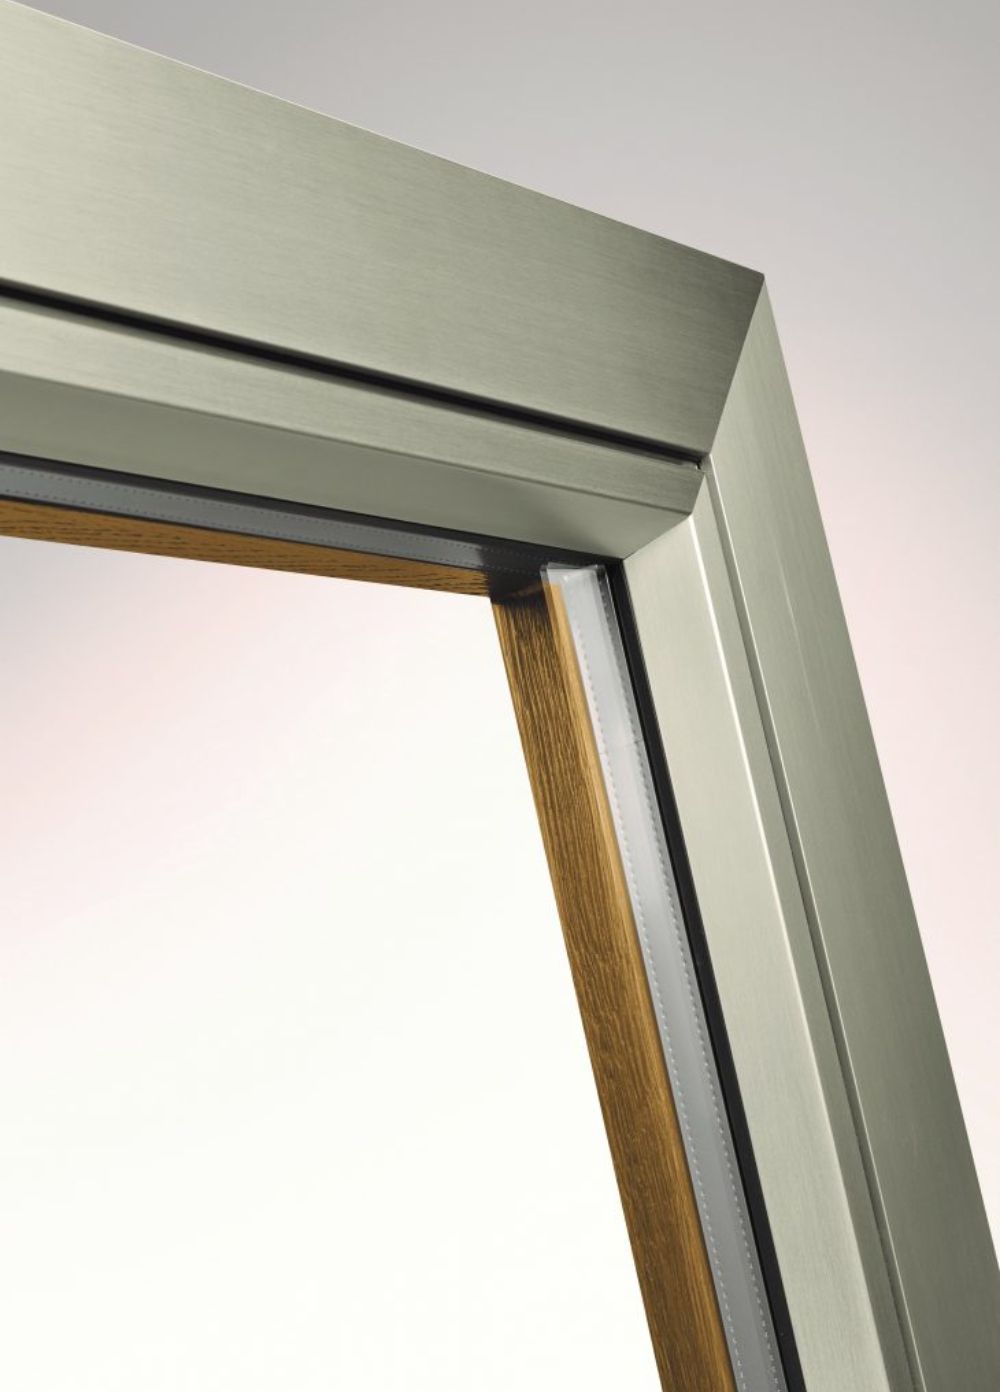 Aluminum wood frames with external wood detail